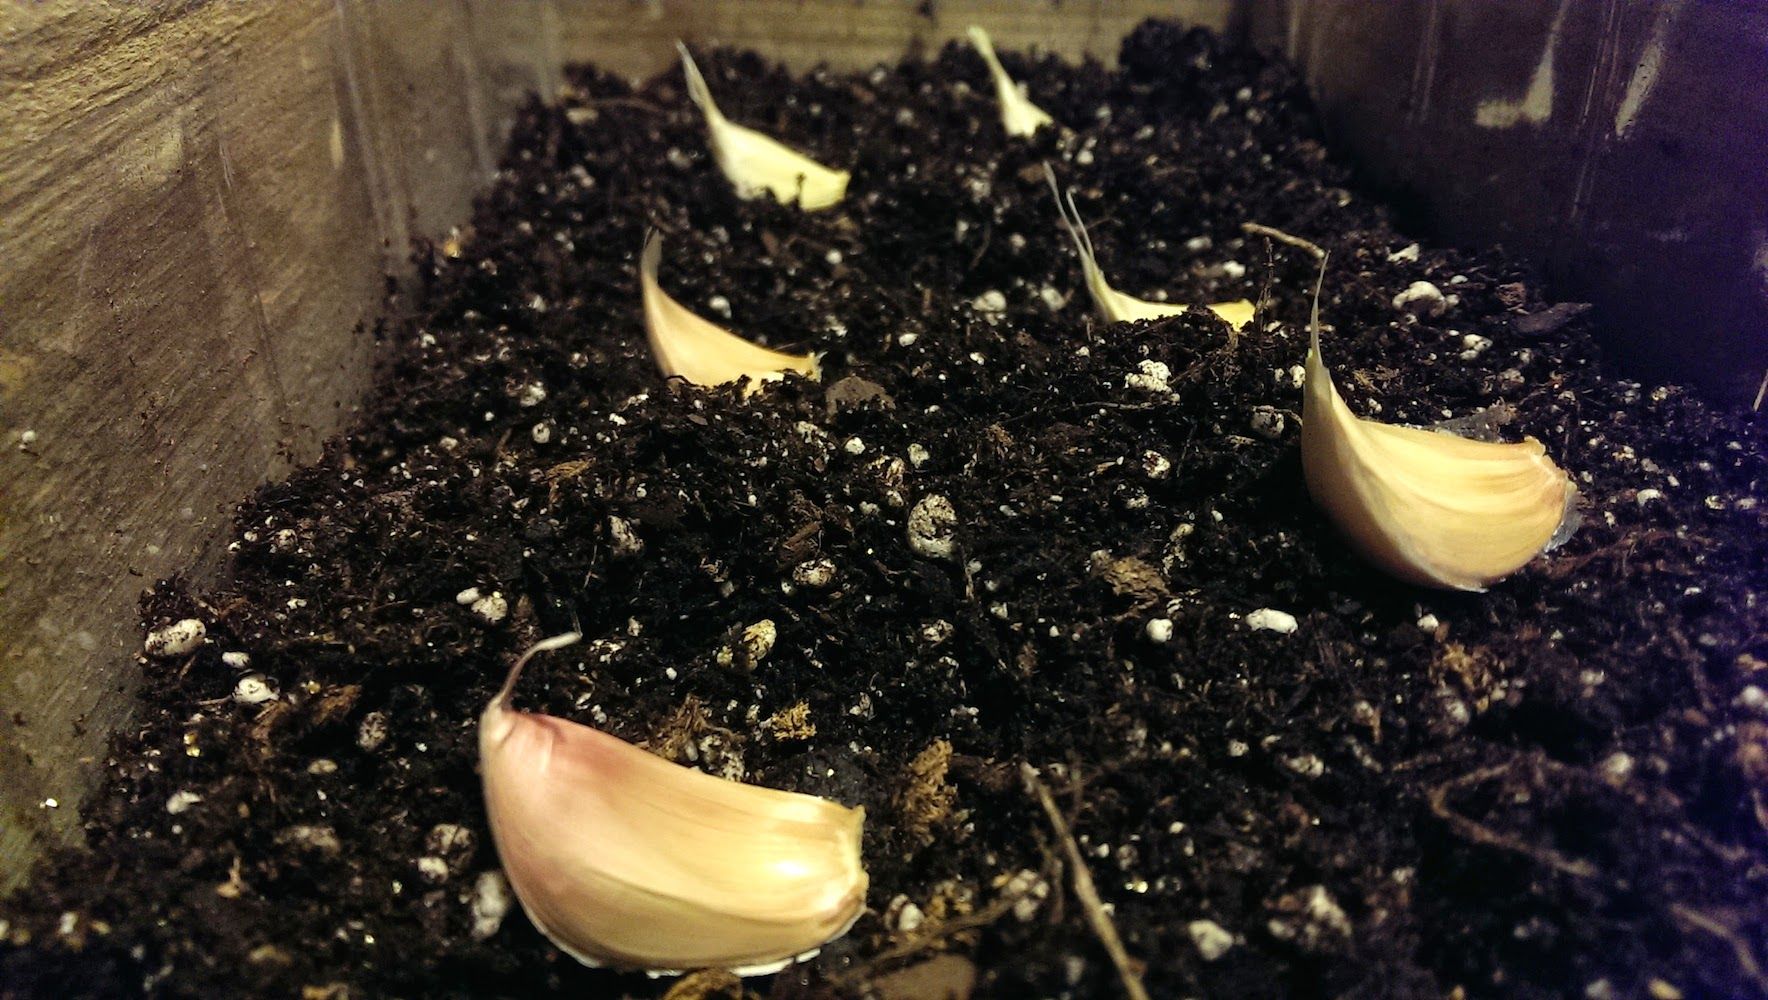 https://www.starkbros.com/images/dynamic/wp-content/uploads/2015/02/Garlic-Cloves-Pre-Planting.jpg